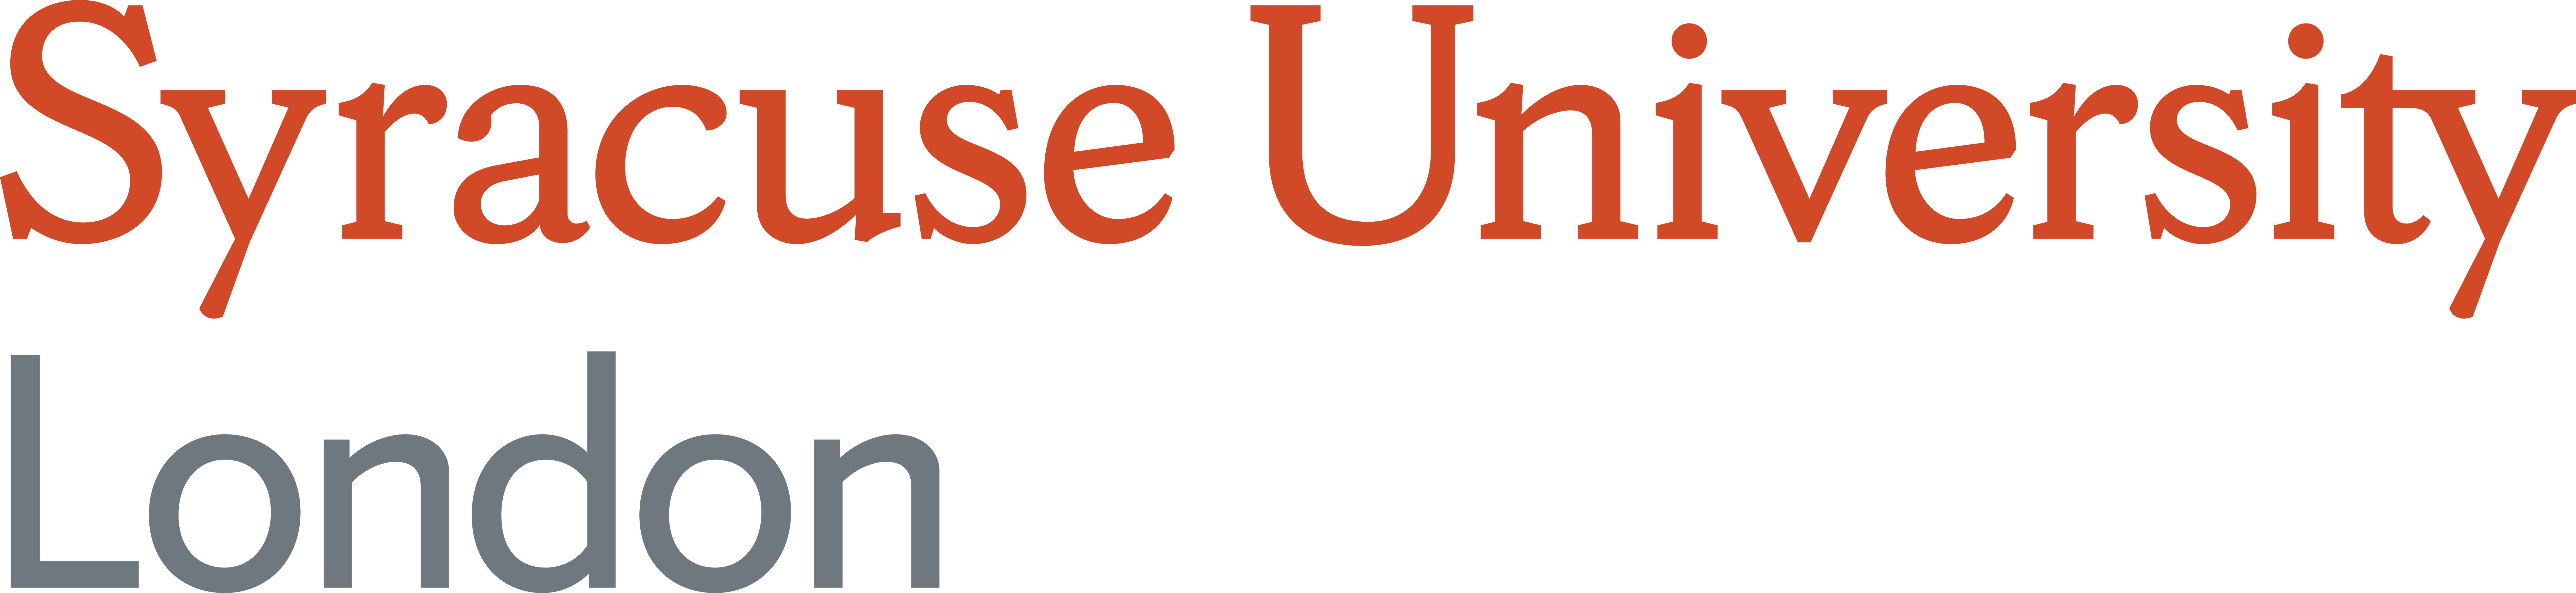 logo for Syracuse University (USA) London Program